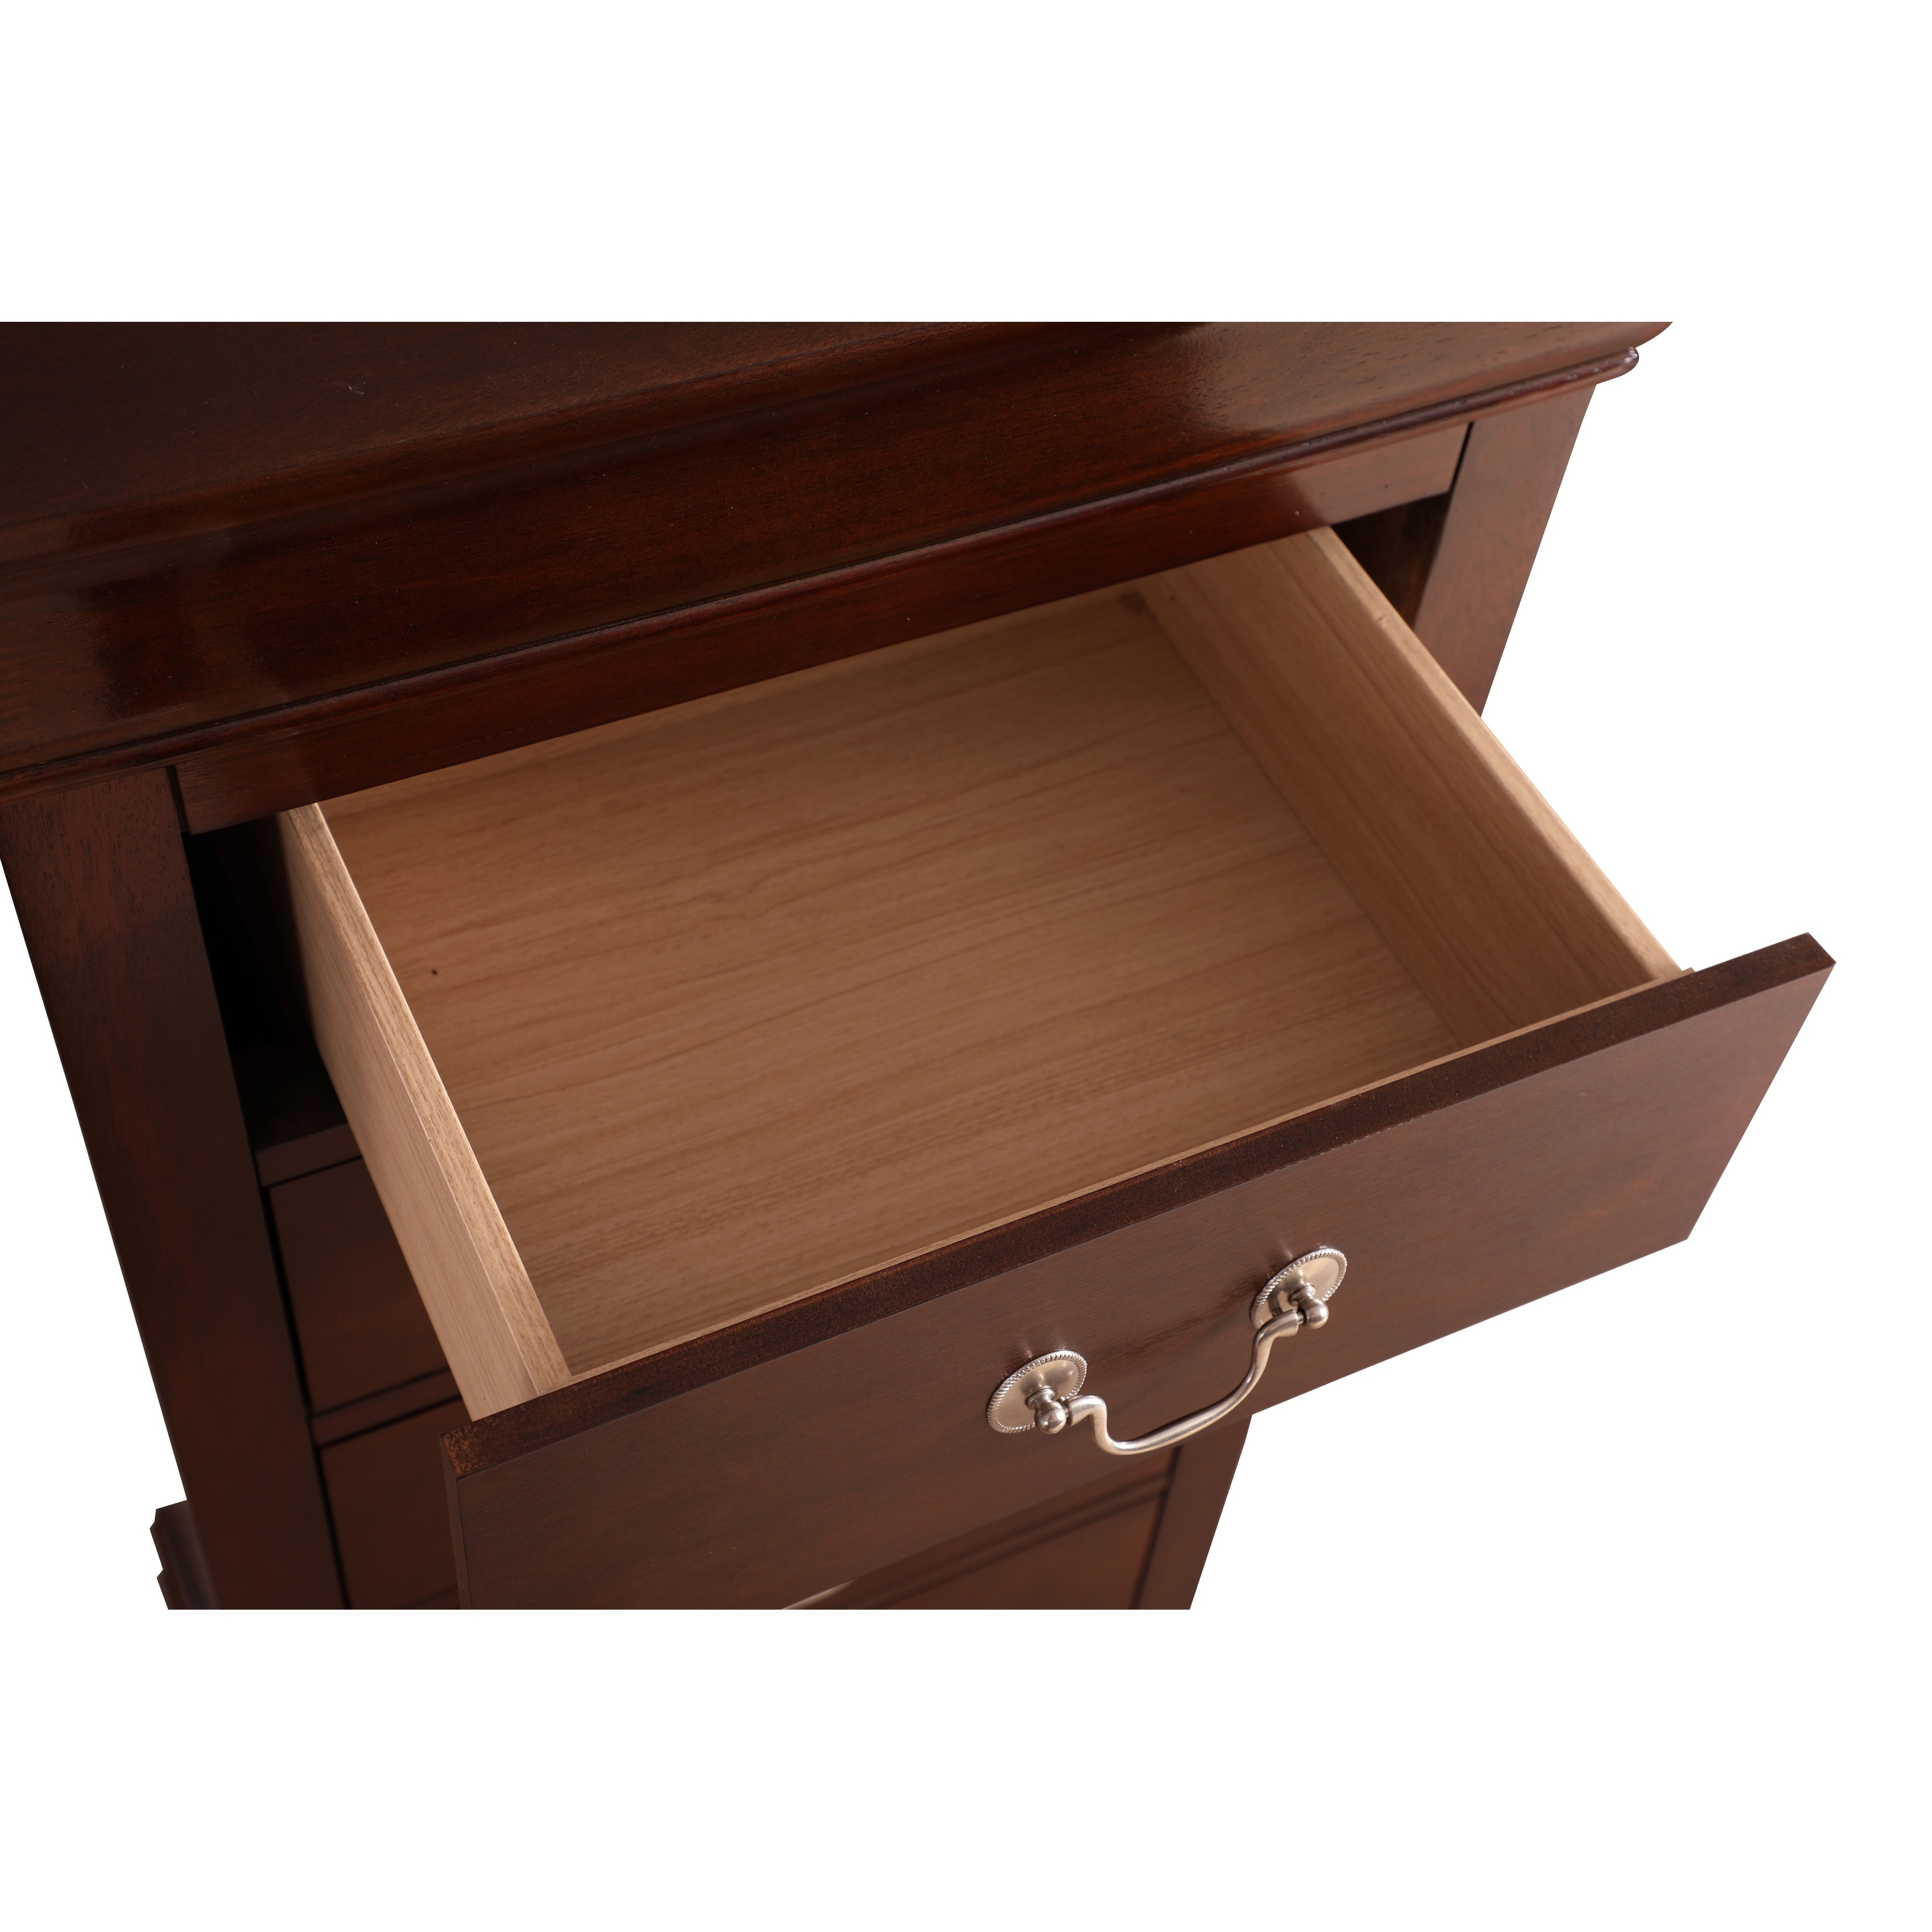 https://ak1.ostkcdn.com/images/products/is/images/direct/802fbff4500dace8d8dee977c602d4fcb25474ec/Louis-Phillipe-Wood-7-drawer-Lingerie-Chest.jpg